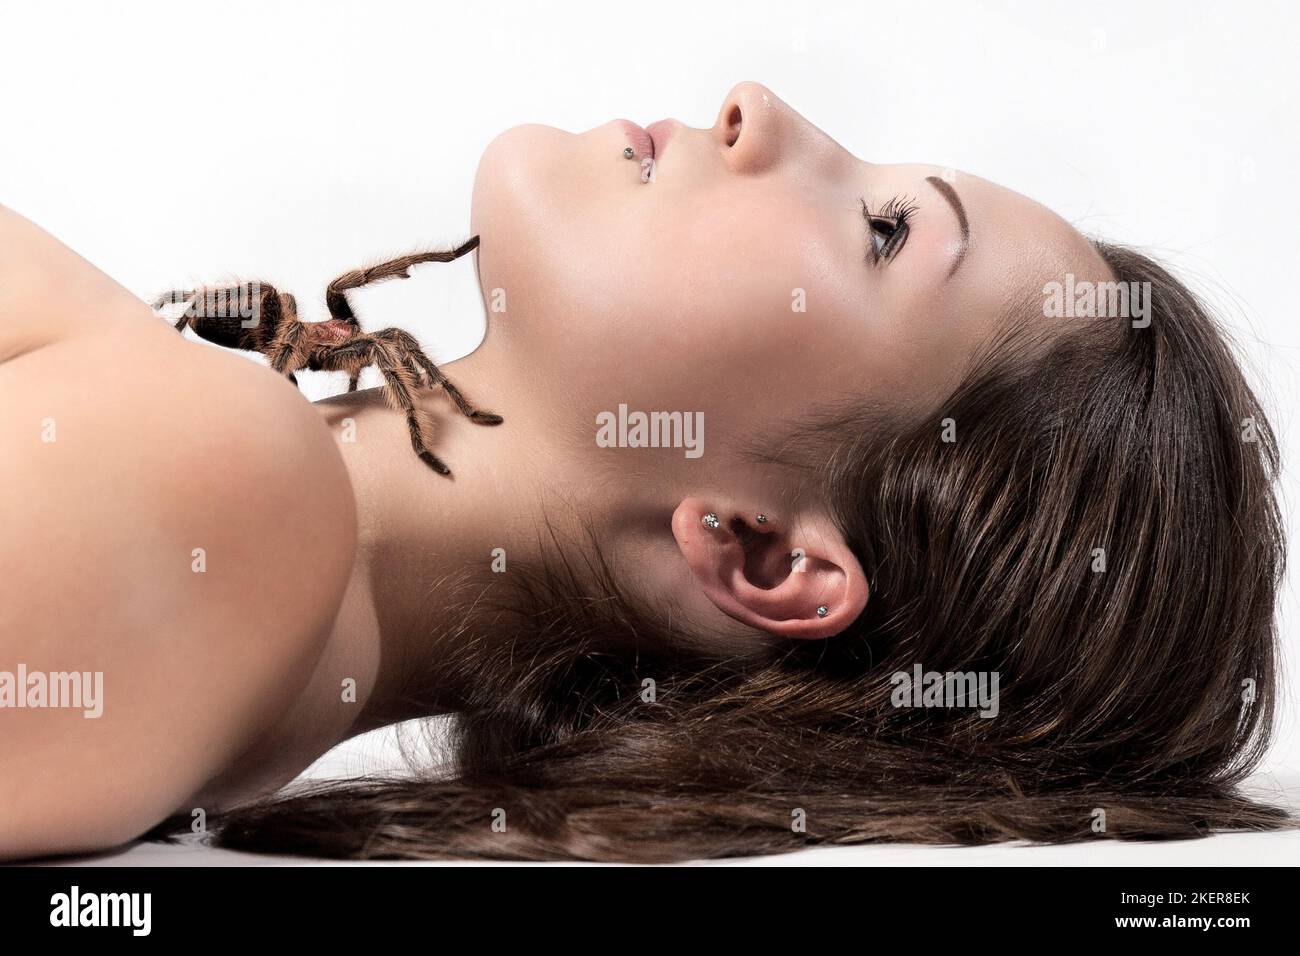 woman and tarantula Stock Photo